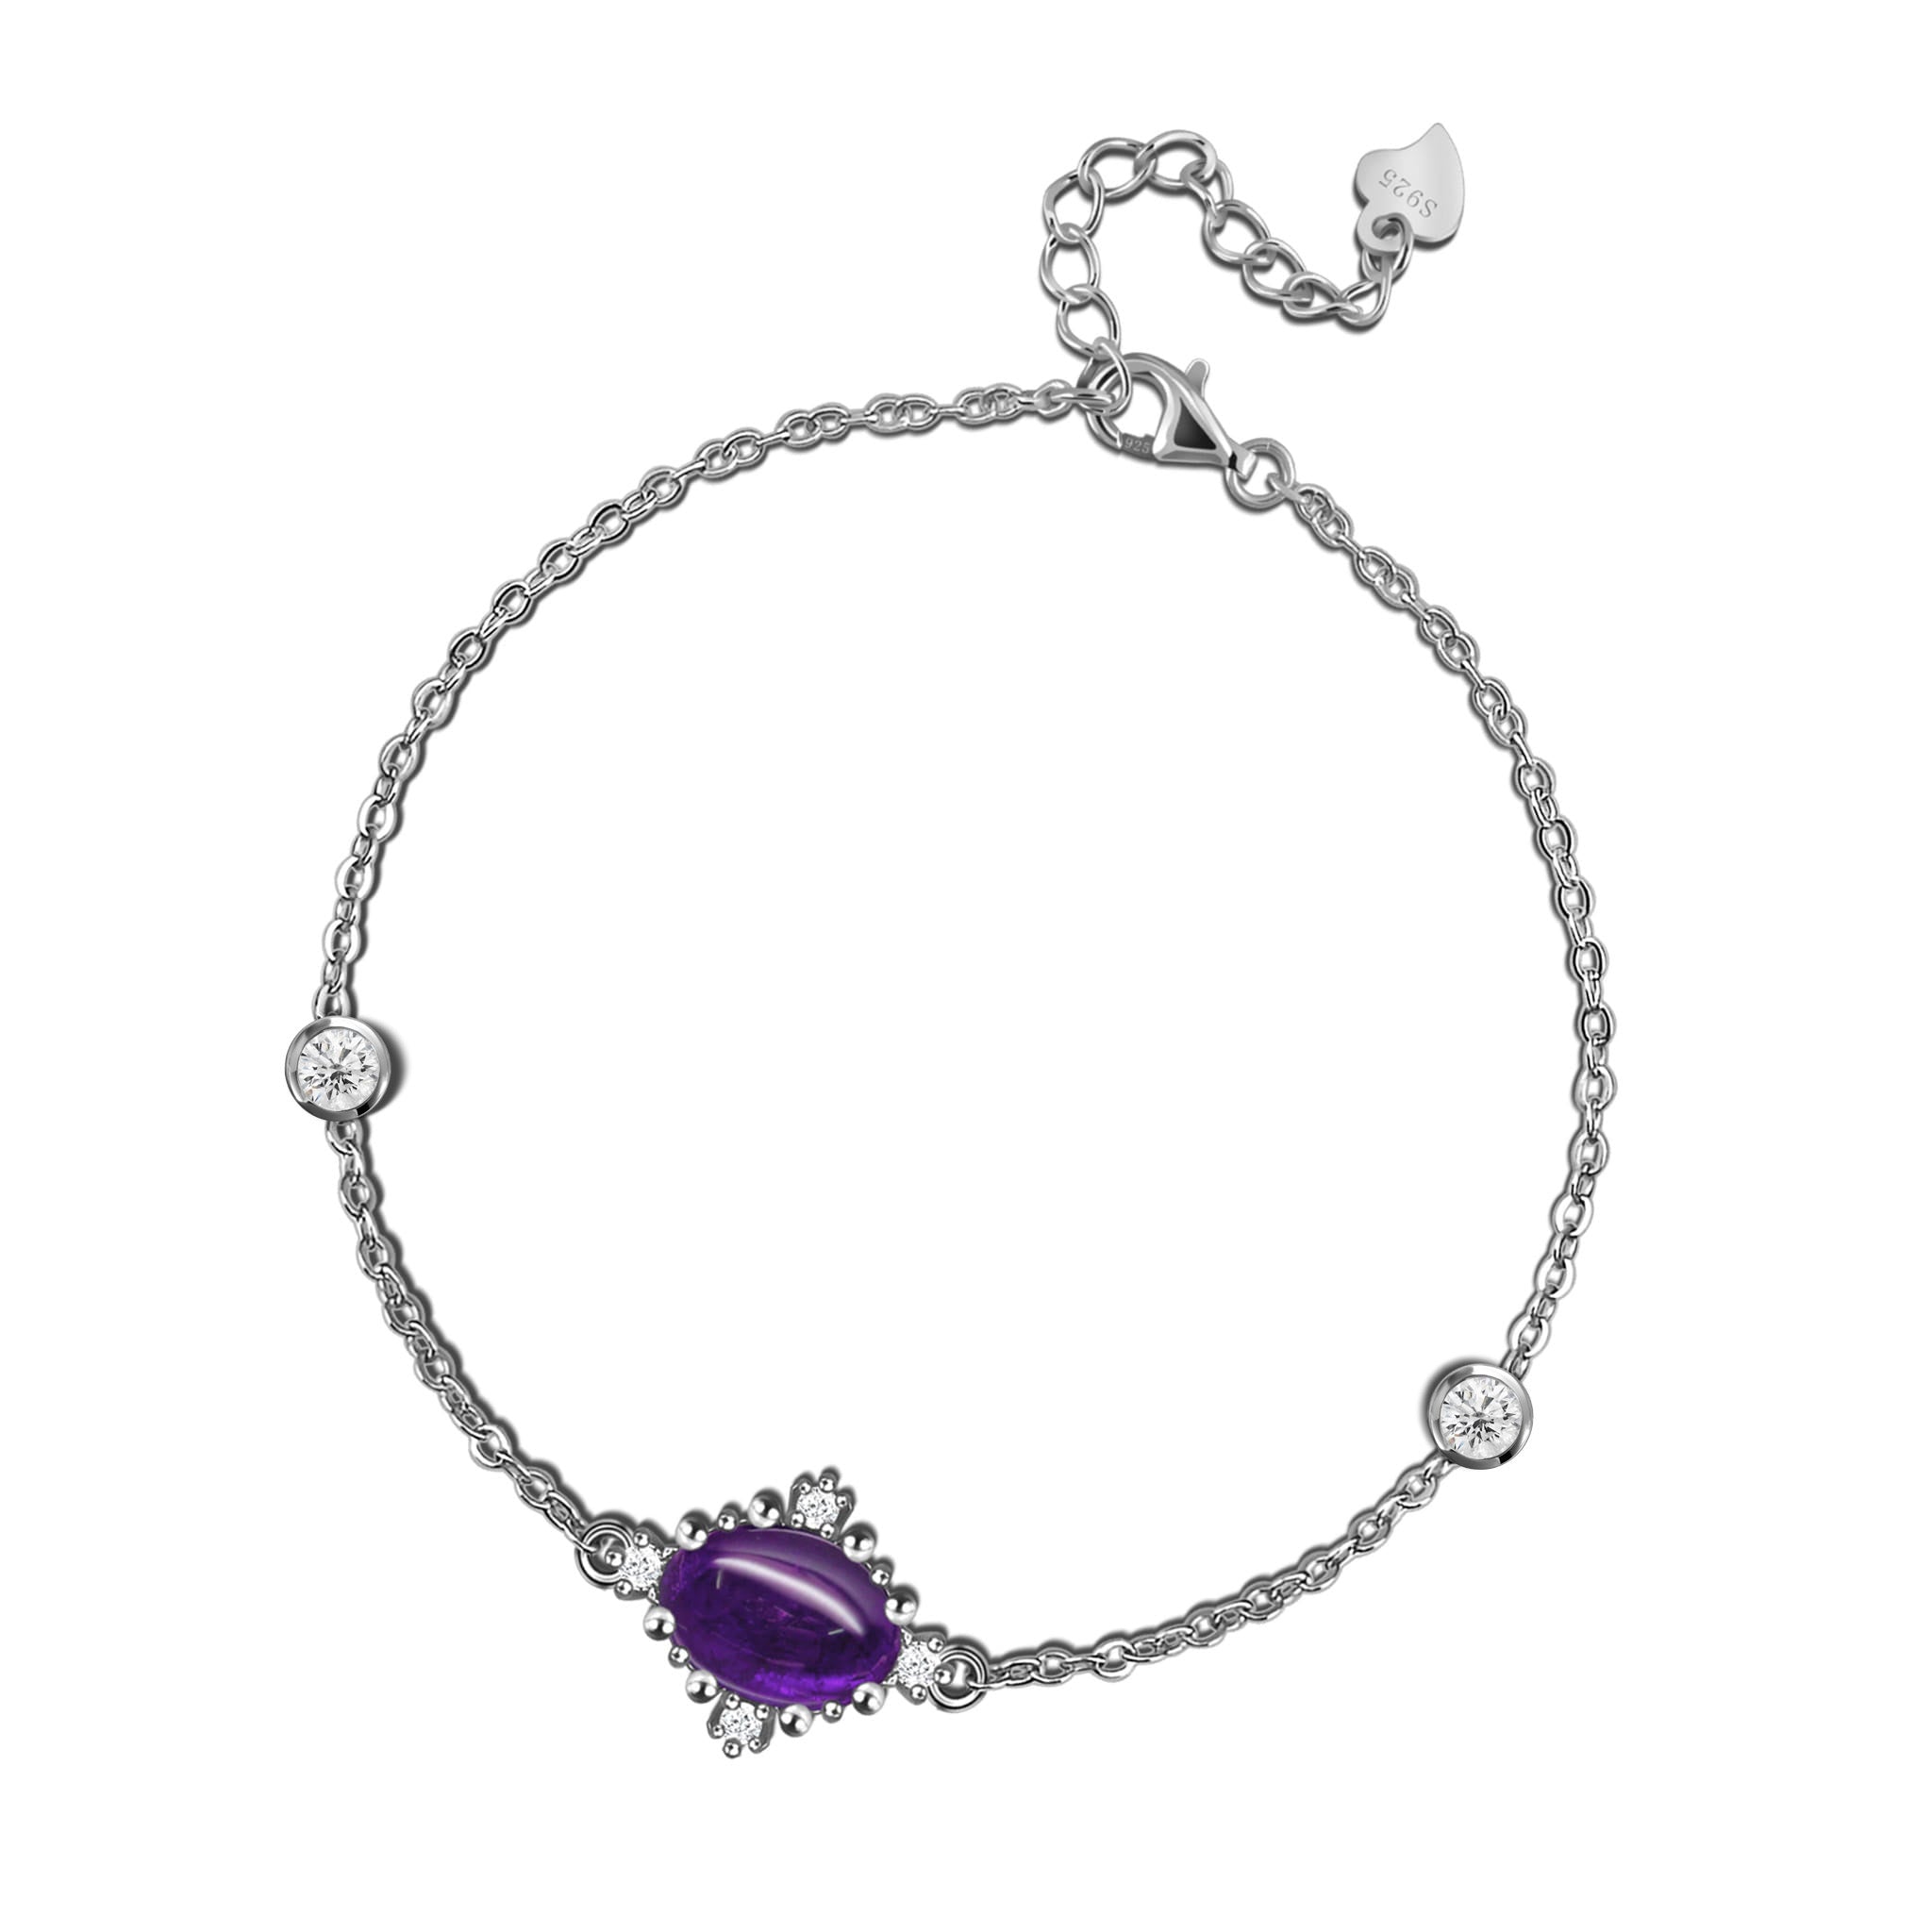 Mysterious Light Purple Cabochon Amethyst Sterling Silver Bracelet